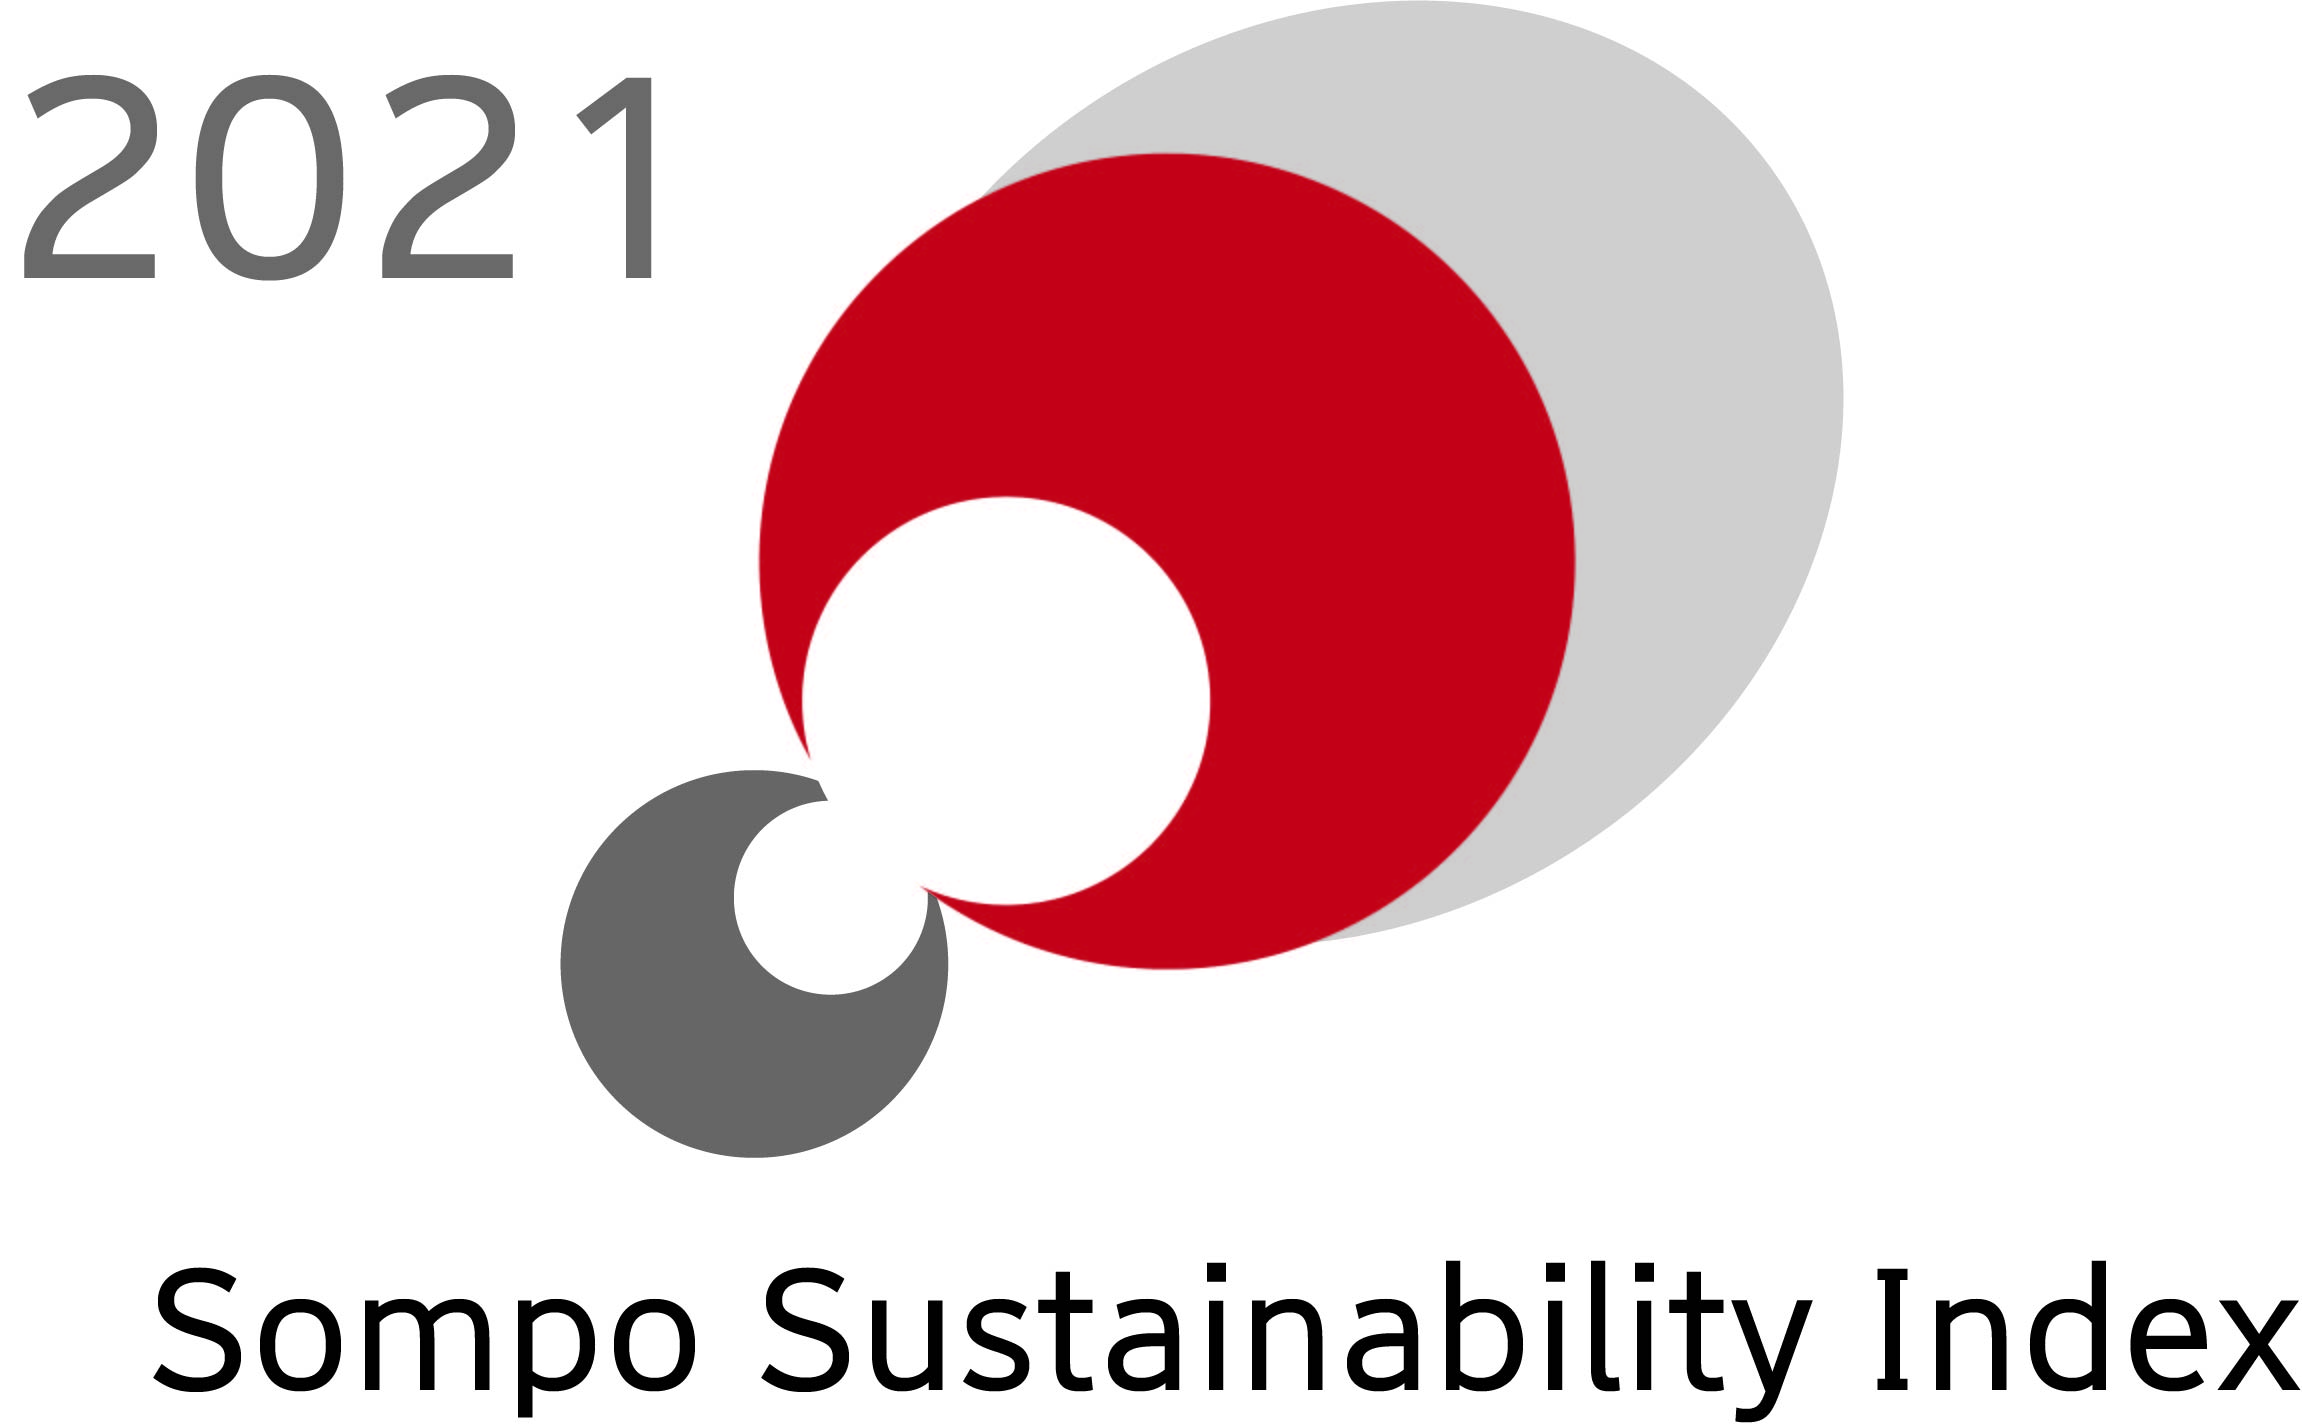 2021 Sonpo Sustainability Index